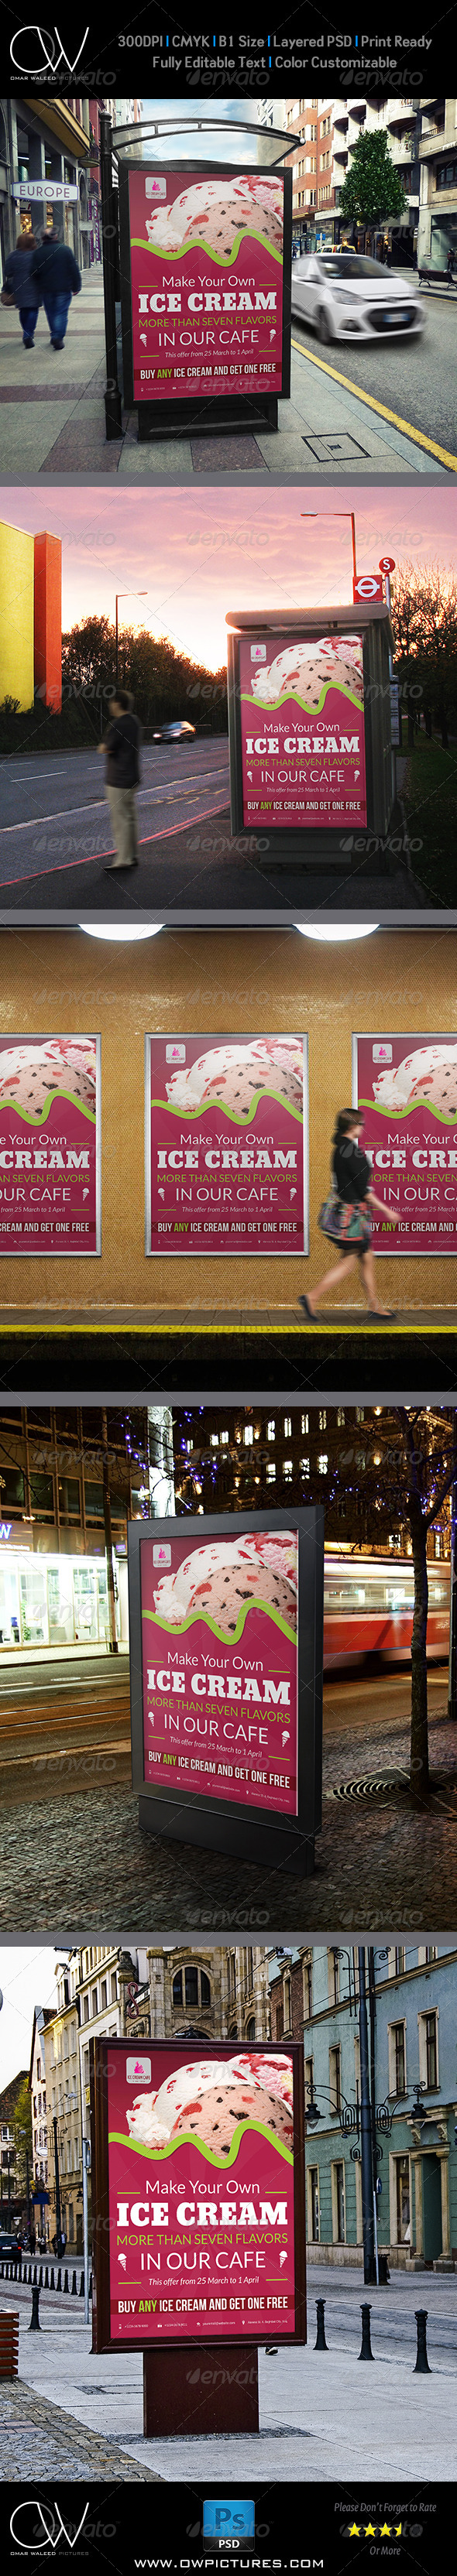 Ice Cream Poster Template